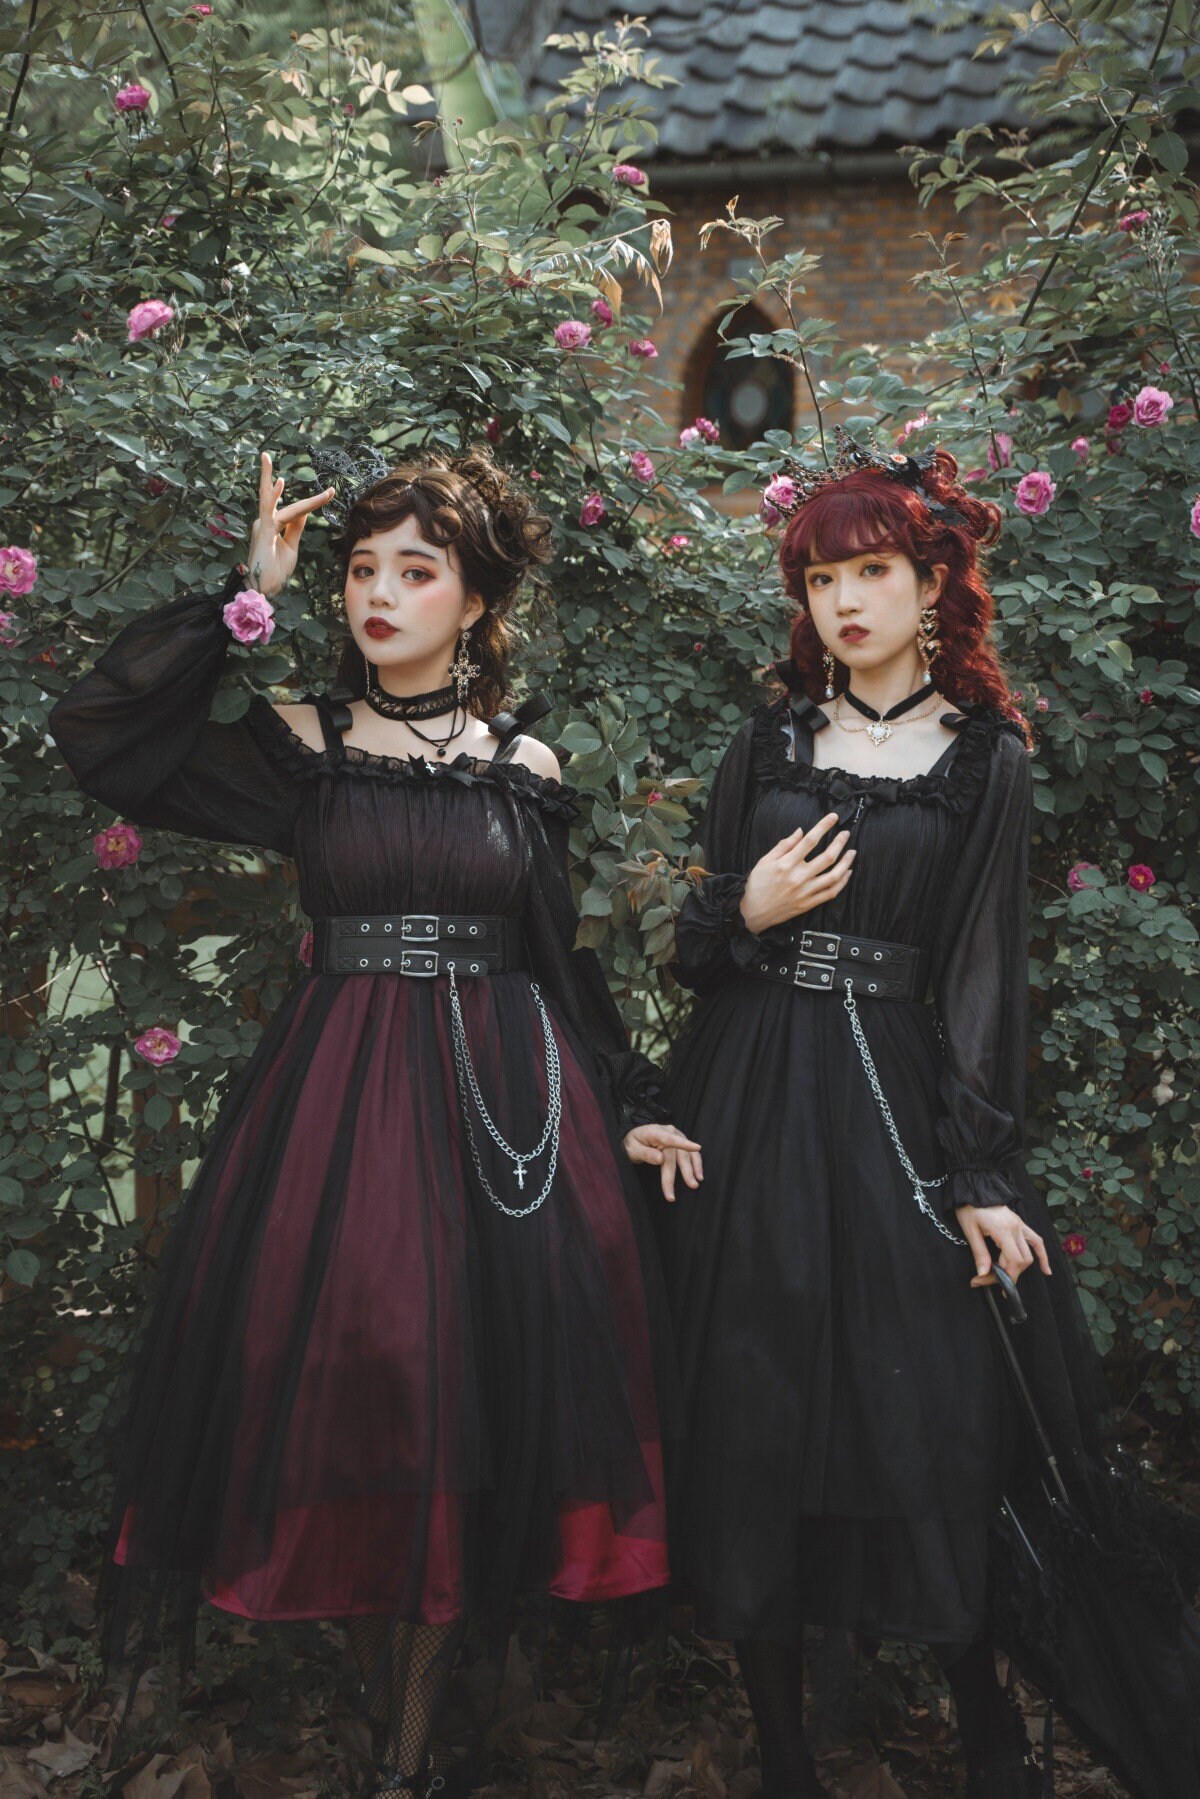 Killer Gothic Vintage Causal Lolita Dress -  Canada